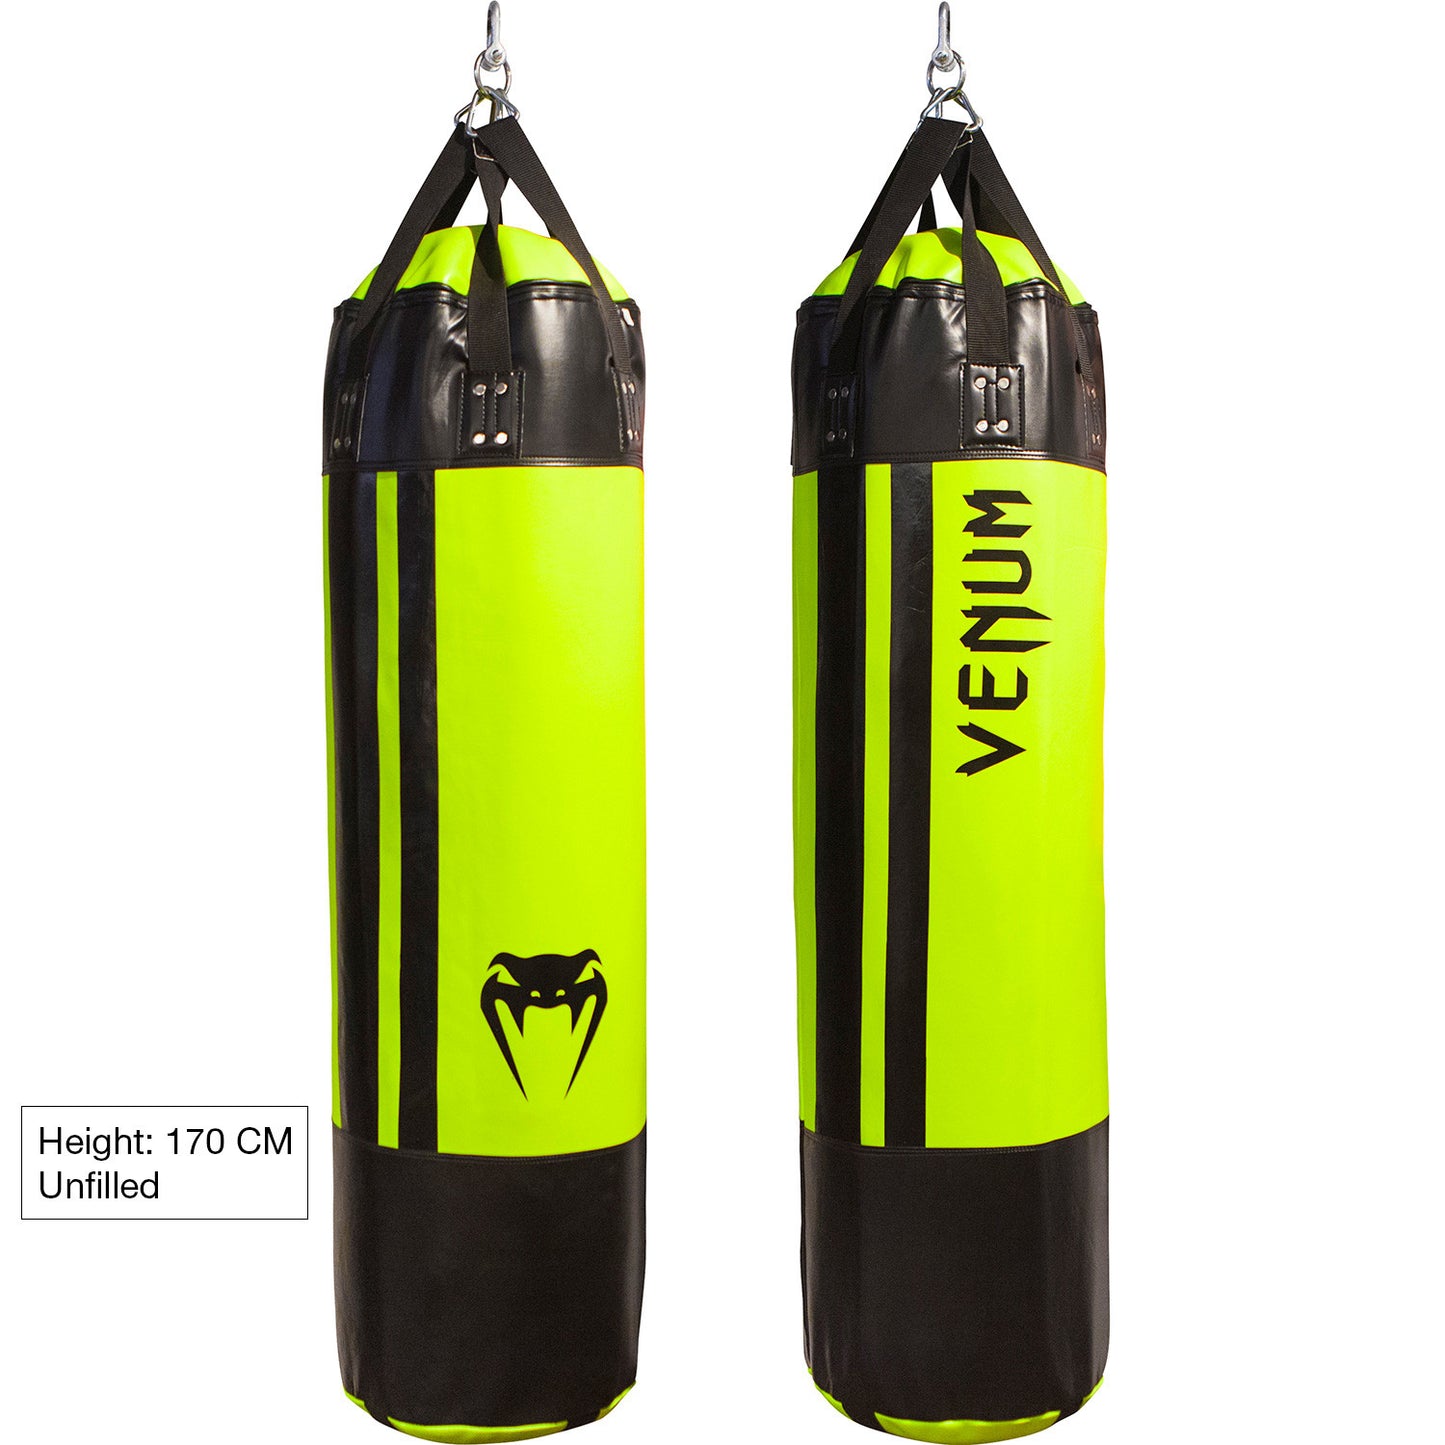 Venum Hurricane Punching Bag - 170 cm - Unfilled - Black/Neo Yellow